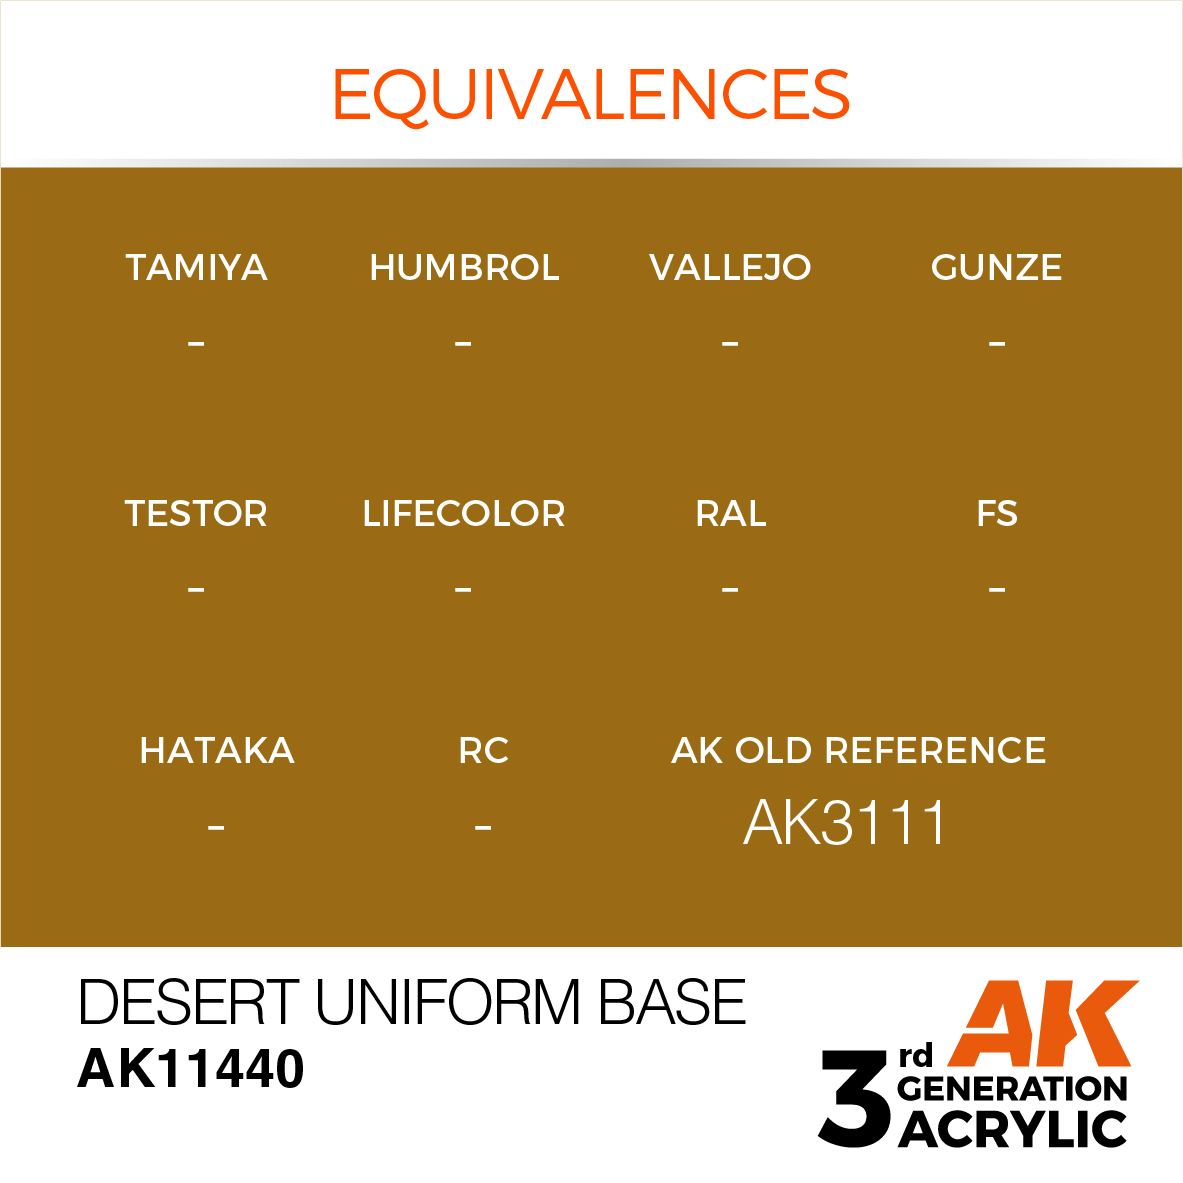 Desert Uniform Base – Figures